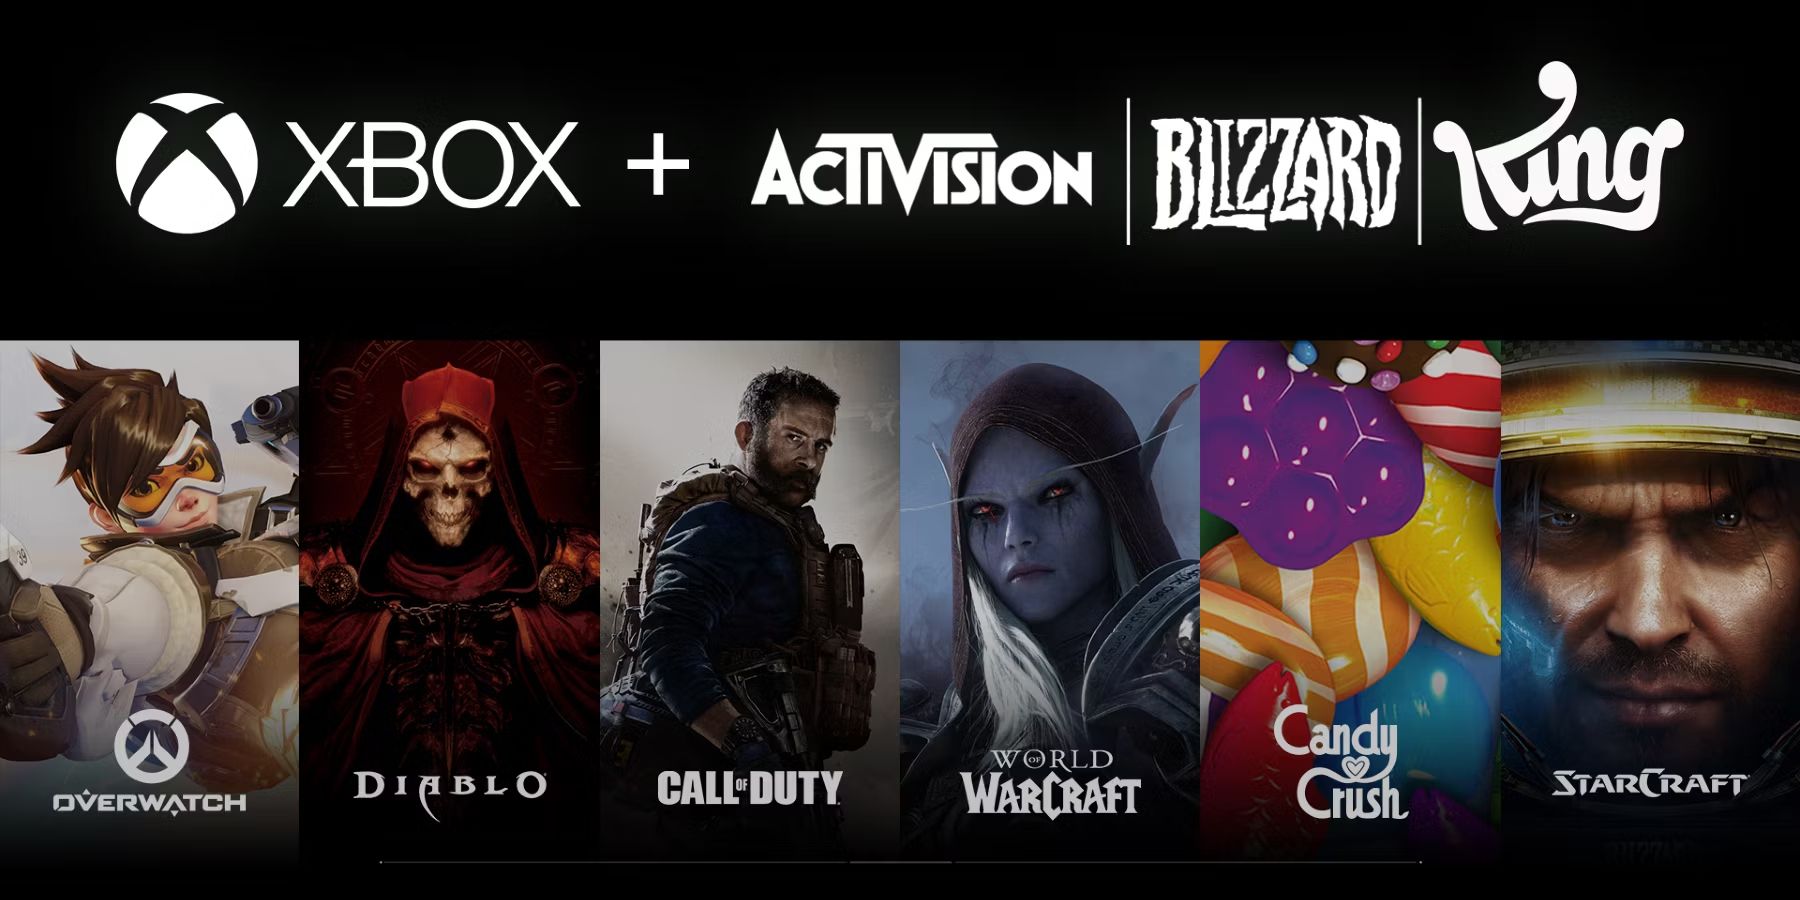 xbox + activision blizzard king franchises